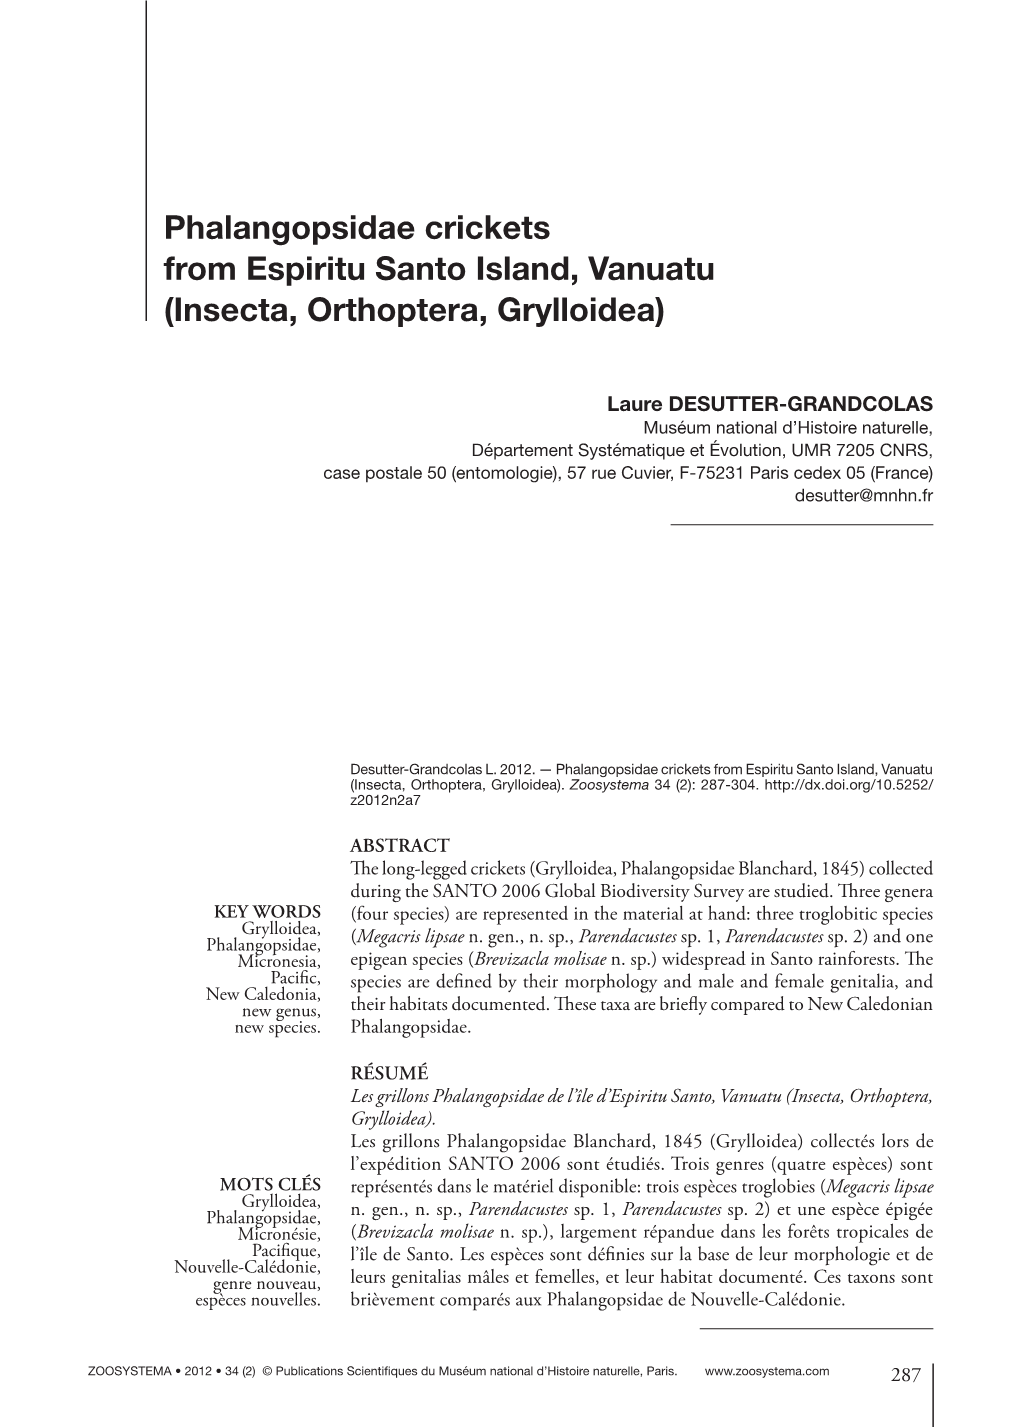 Phalangopsidae Crickets from Espiritu Santo Island, Vanuatu (Insecta, Orthoptera, Grylloidea)